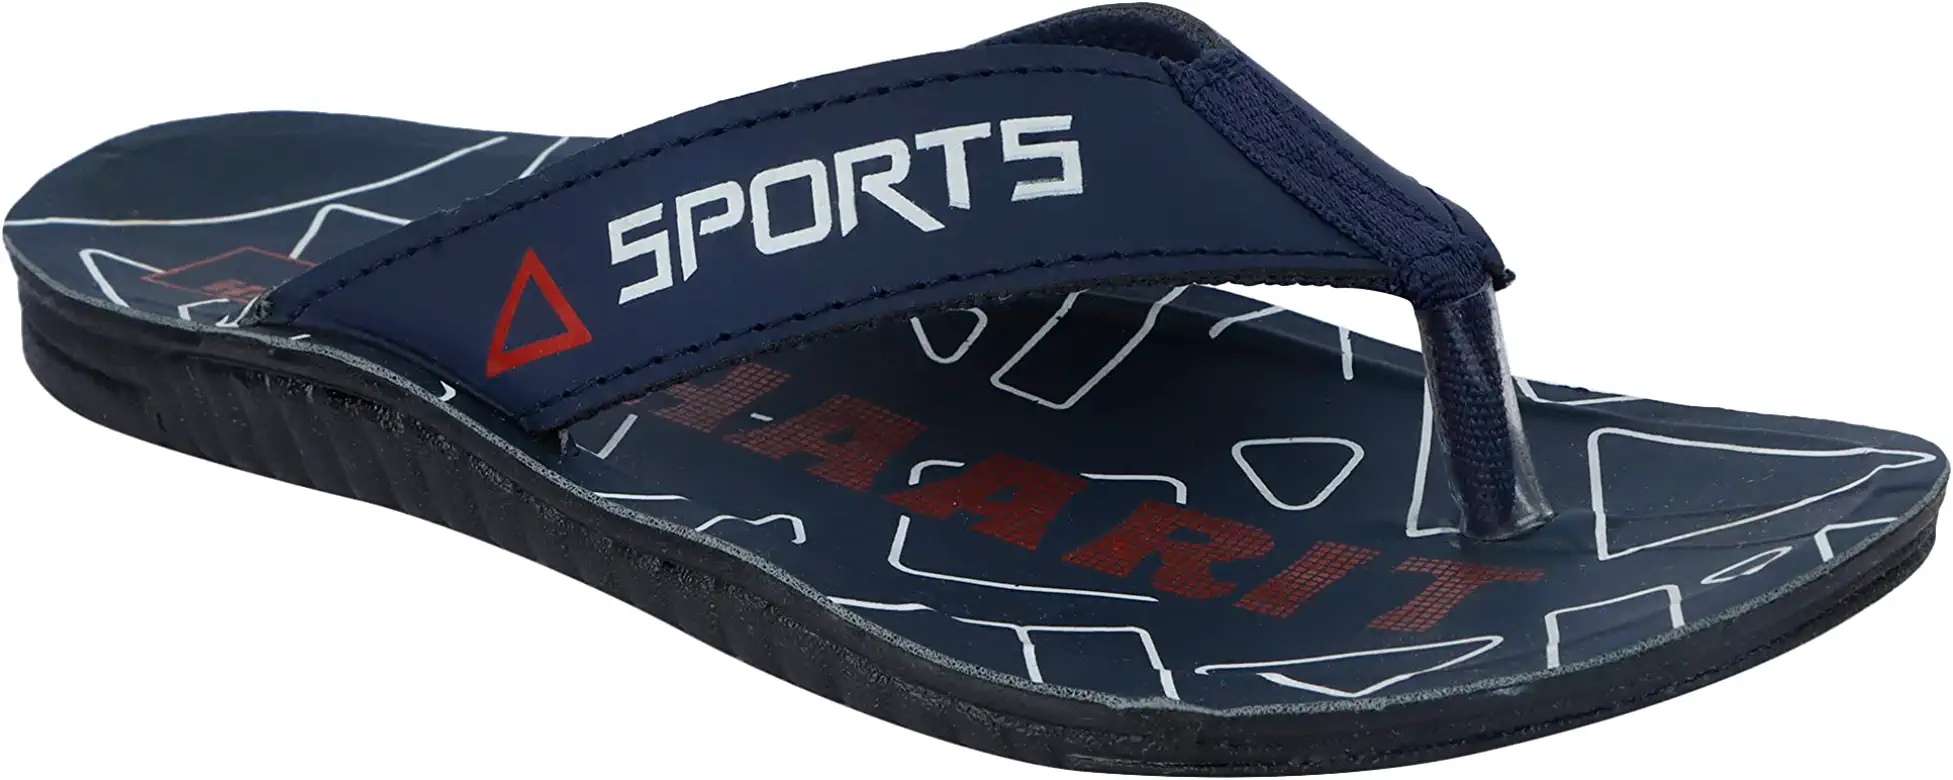 Men's sports slippers